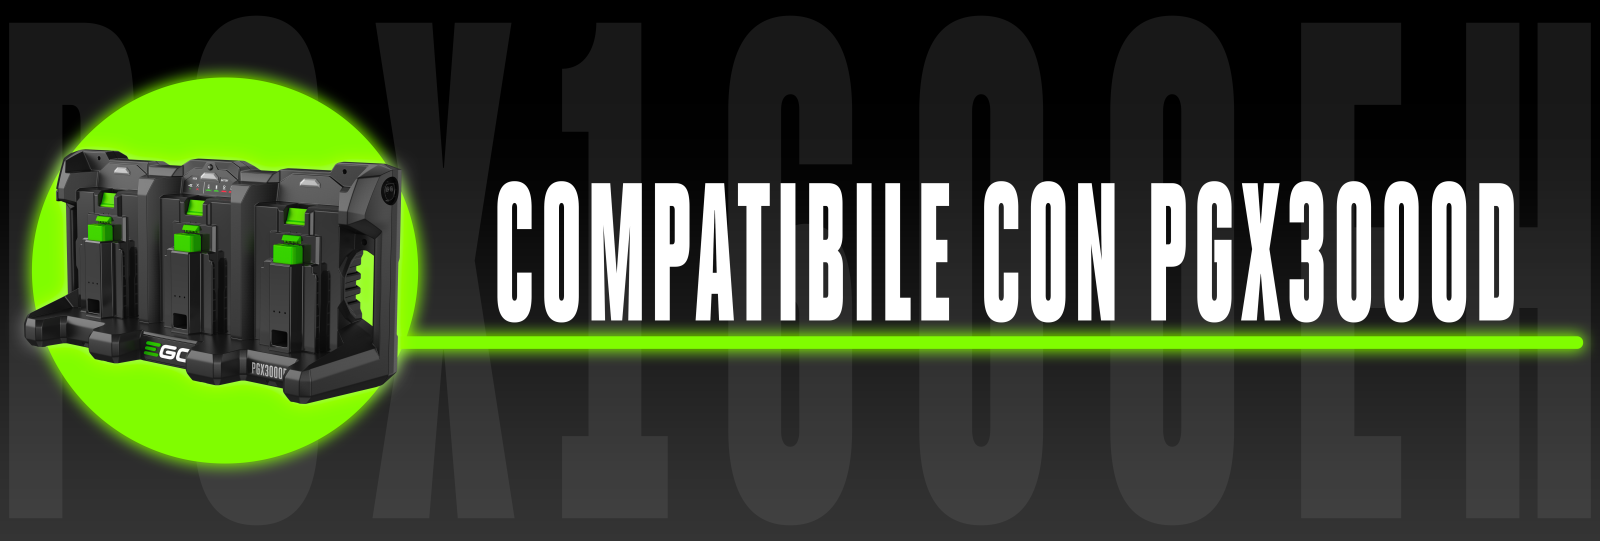 compatibilità pgx1600eh con pgx3000d egopower